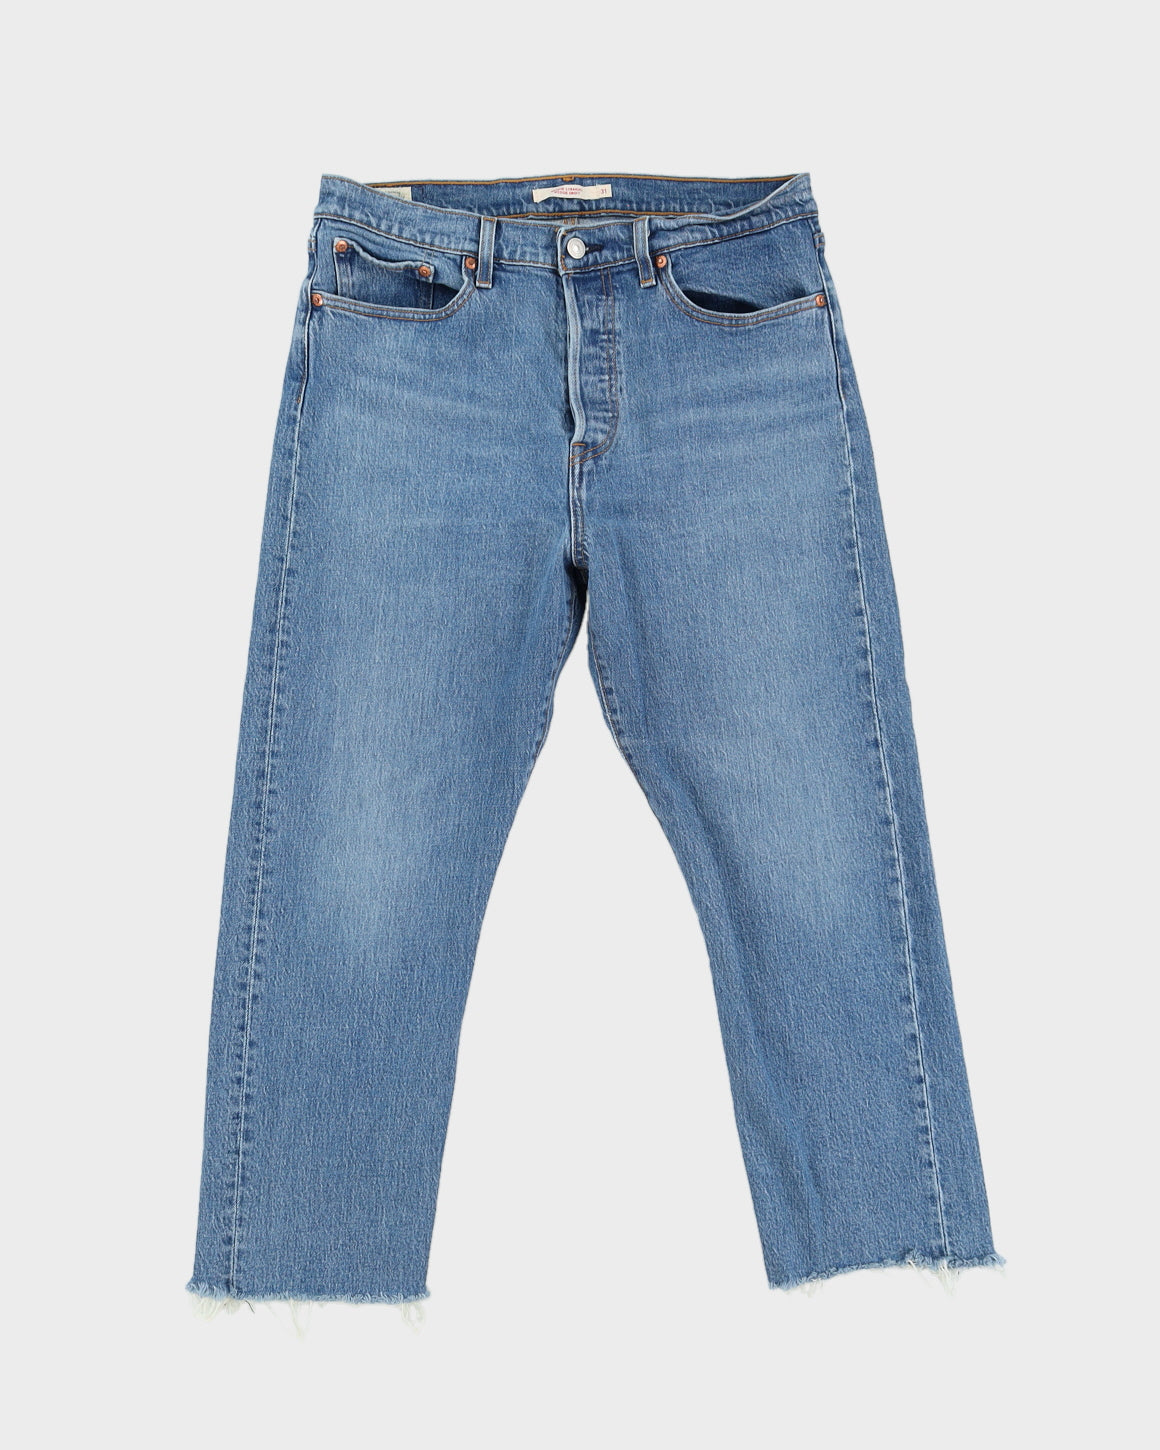 Levi's Big E Repro Blue Jeans - W32 L25